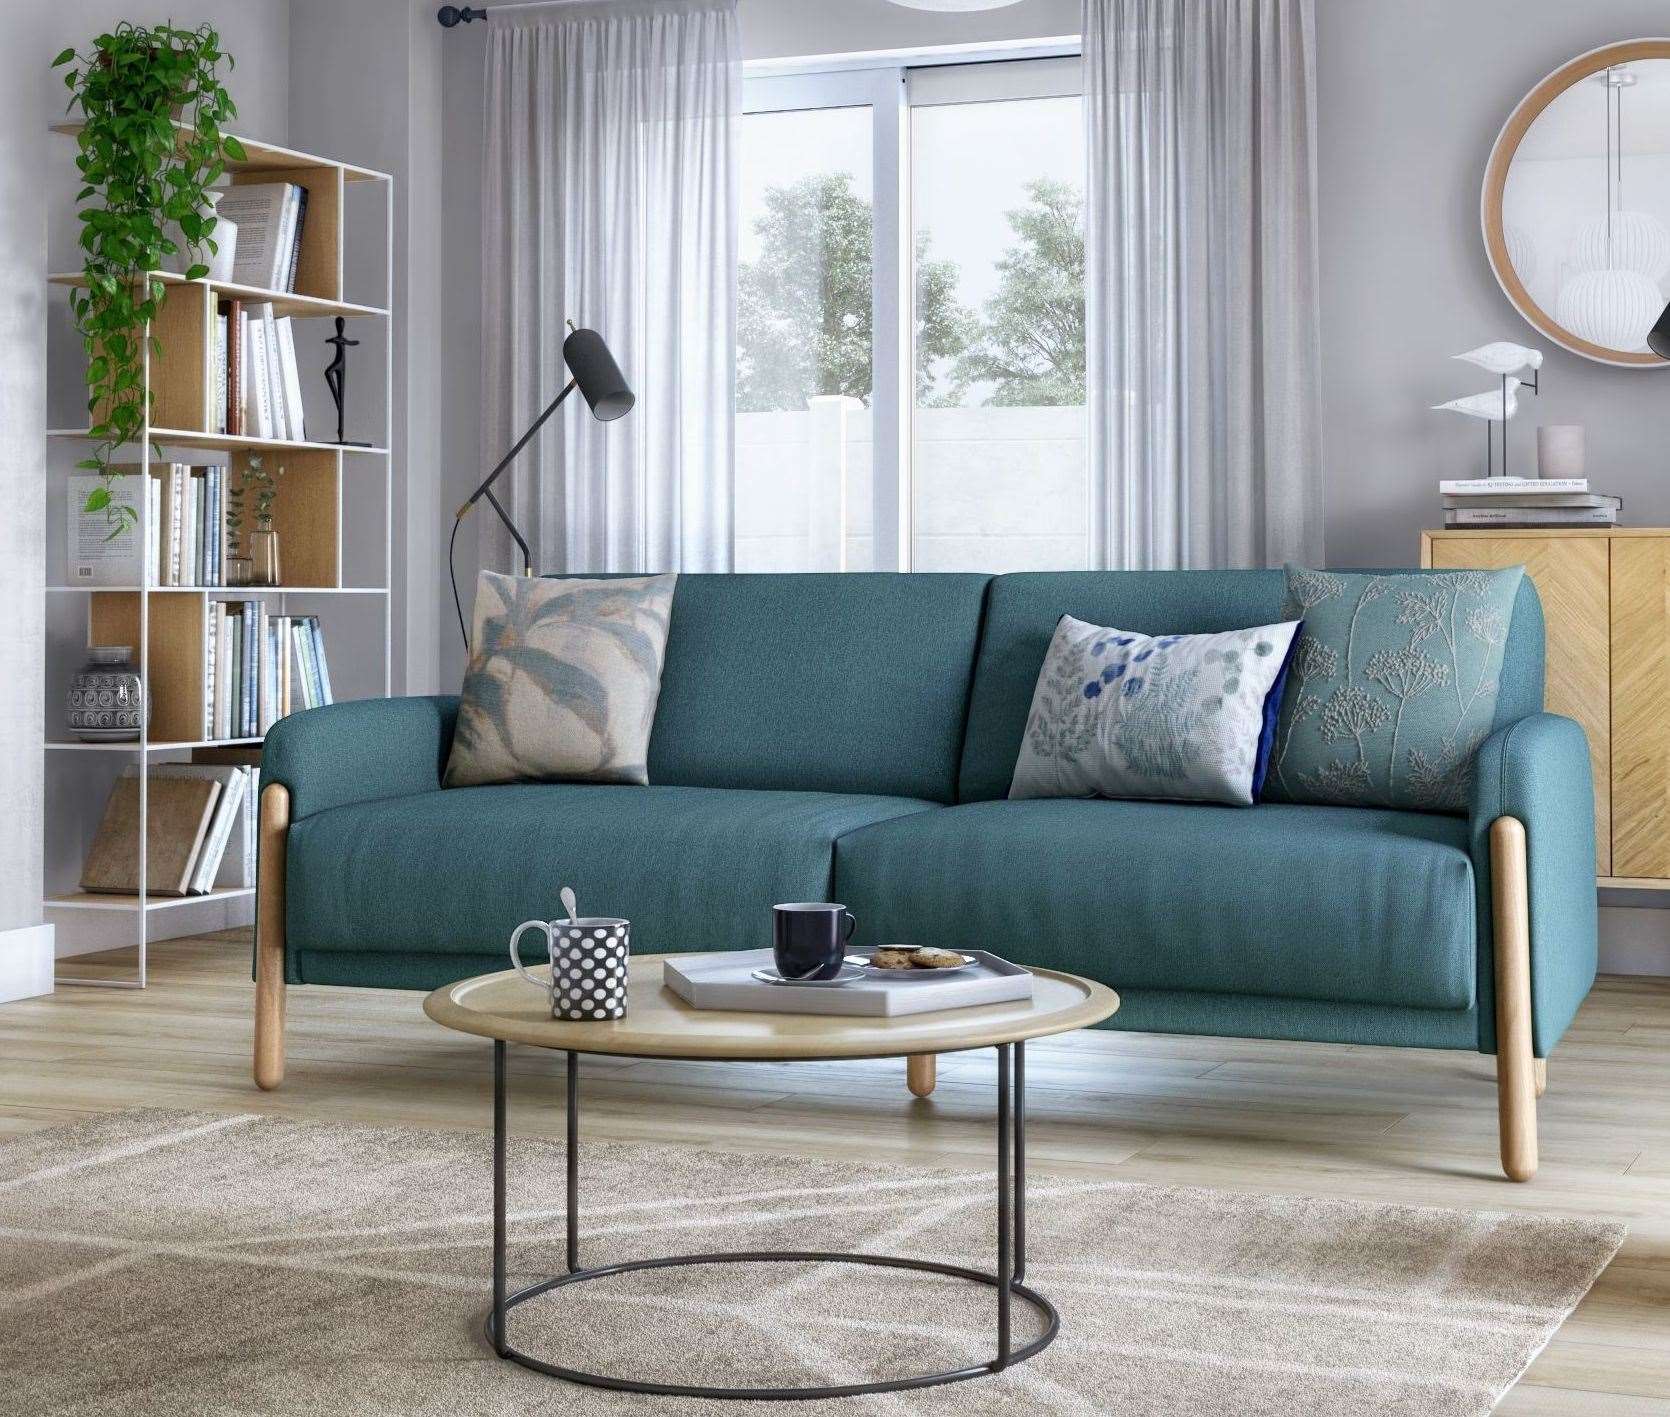 John Lewis recently expanded its furniture rental scheme